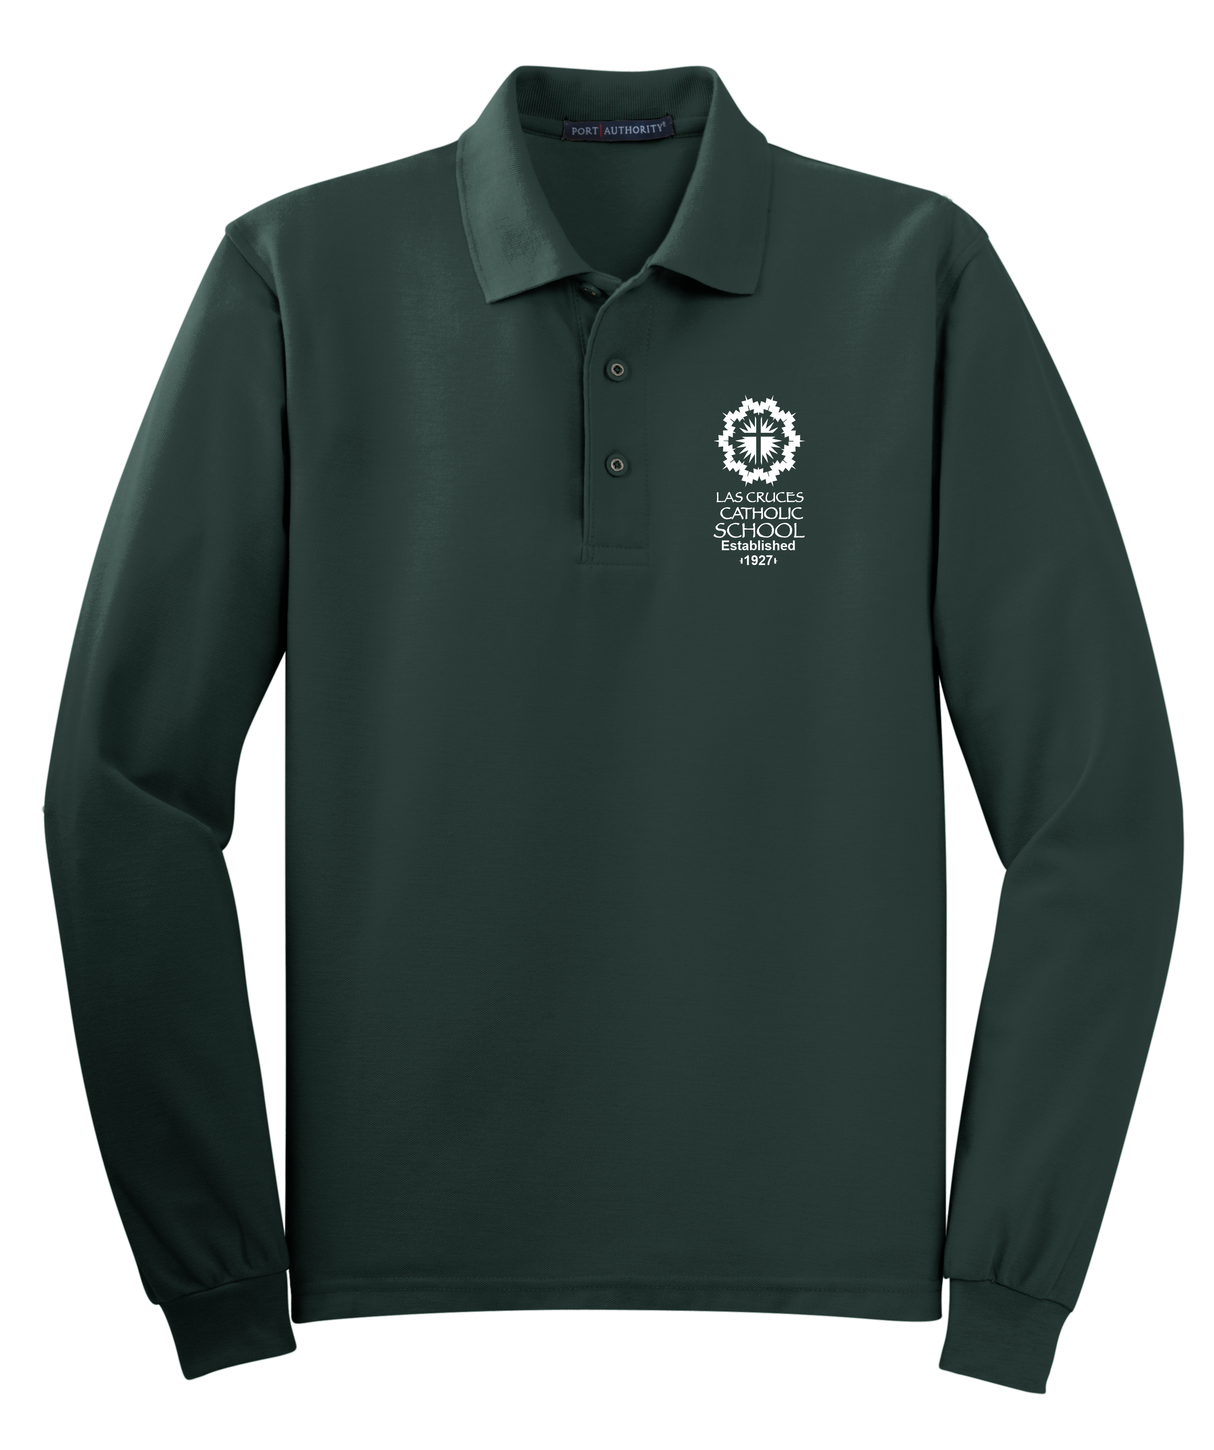 LCCS Elementary Adult Uniform Long-Sleeve Polo